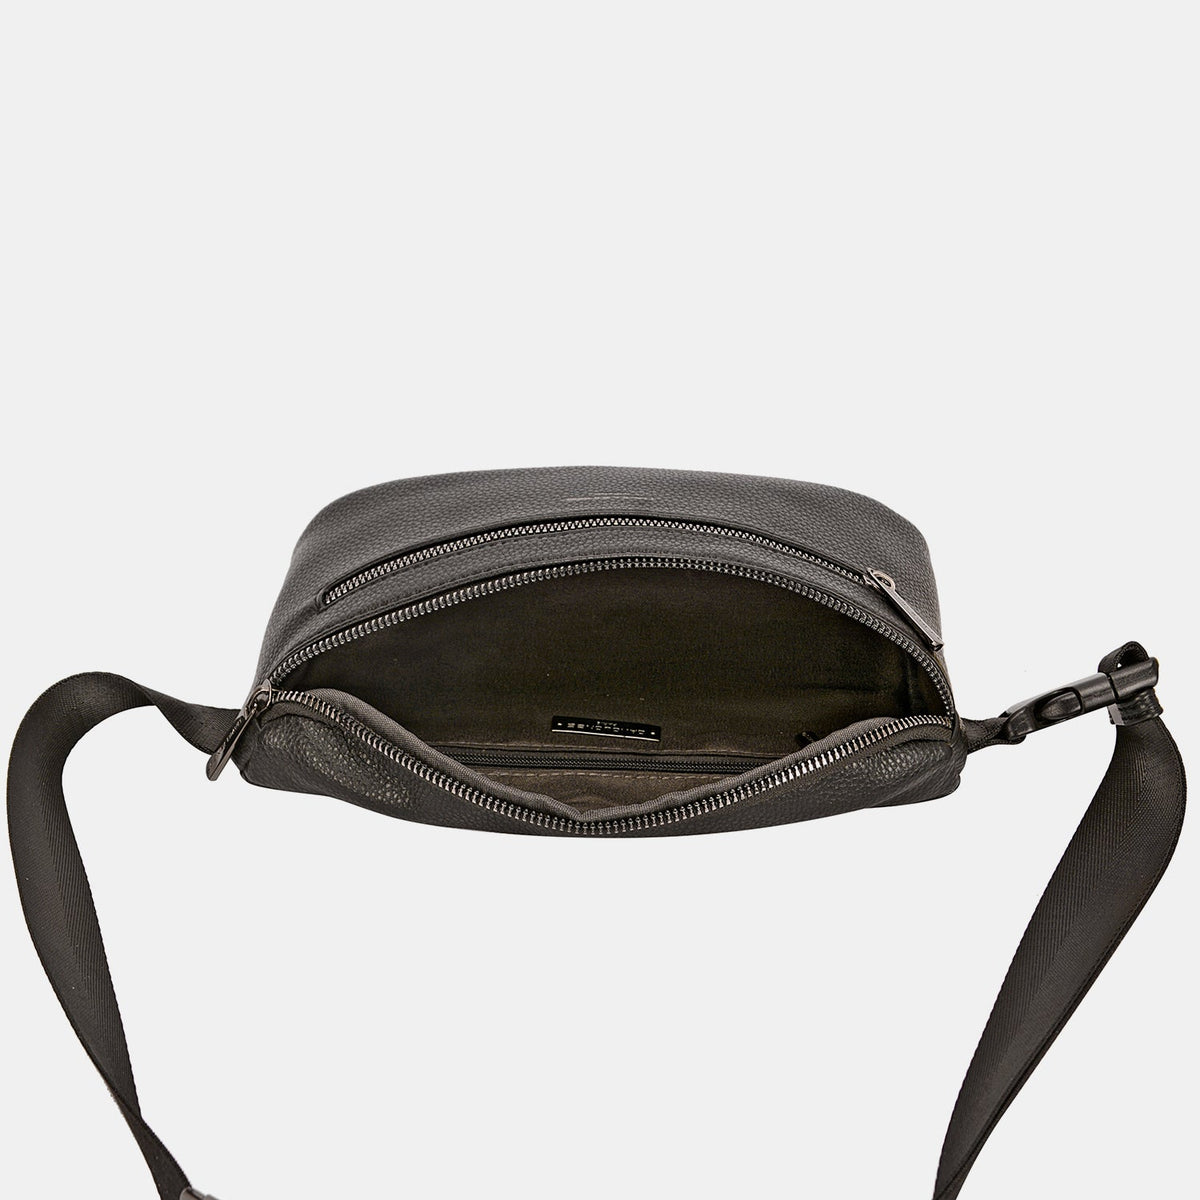 David Jones PU Leather Double Zipper Adjustable Belt Bag - Happily Ever Atchison Shop Co.